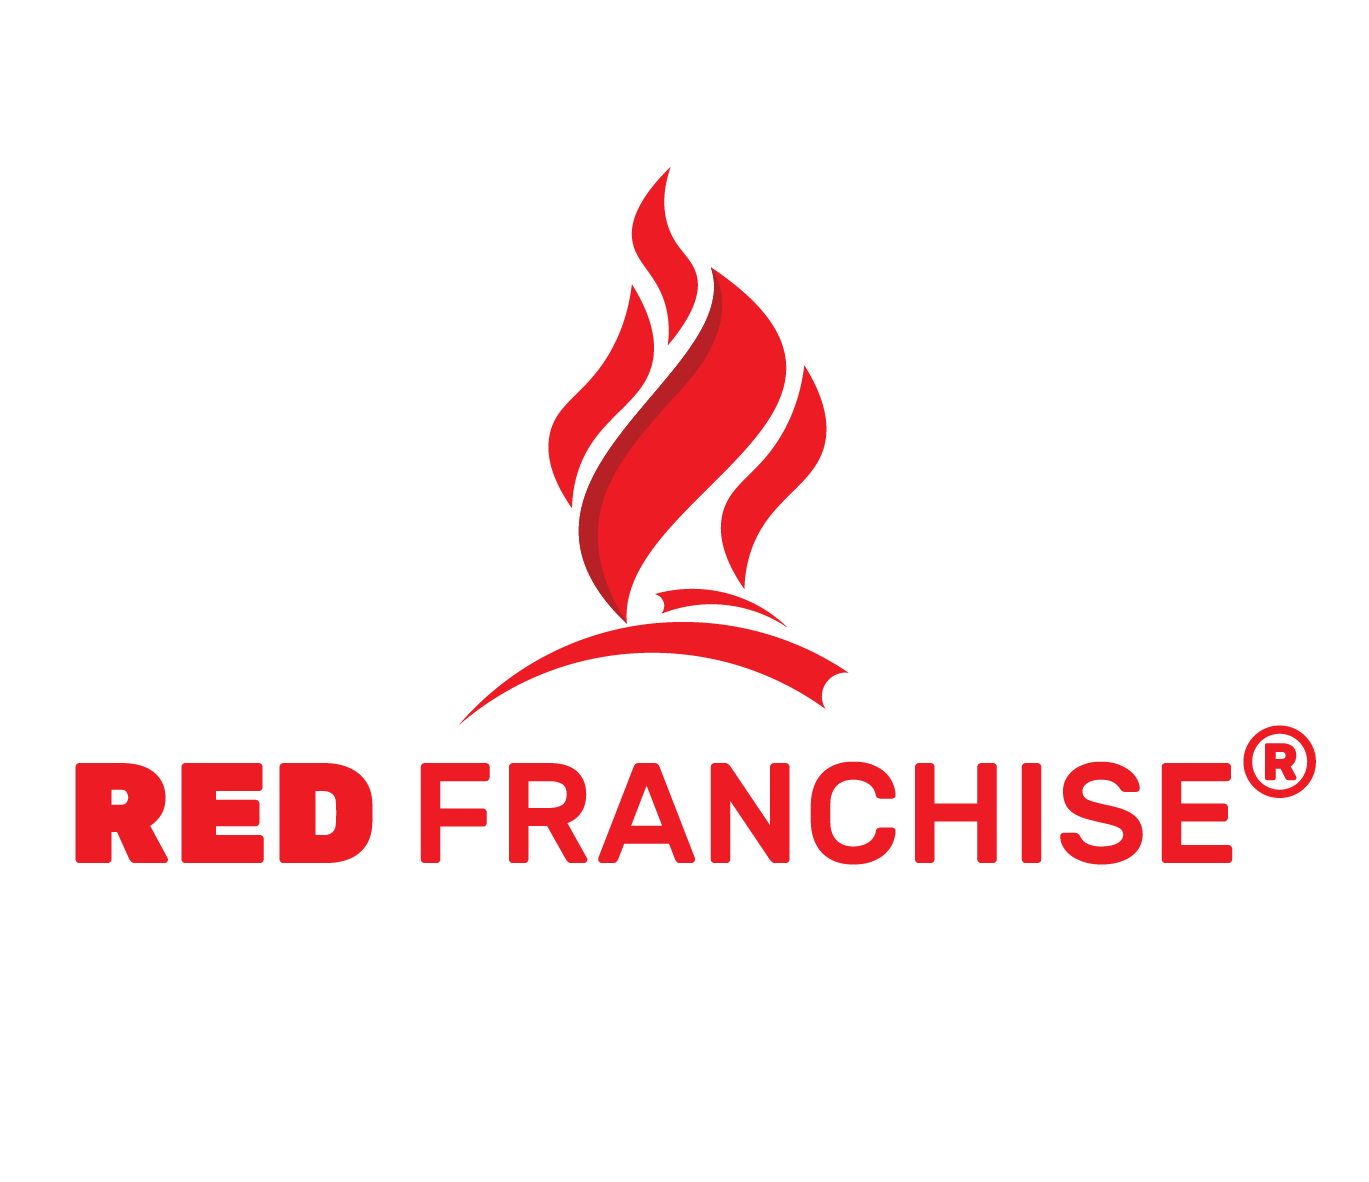 RED FRANCHISE